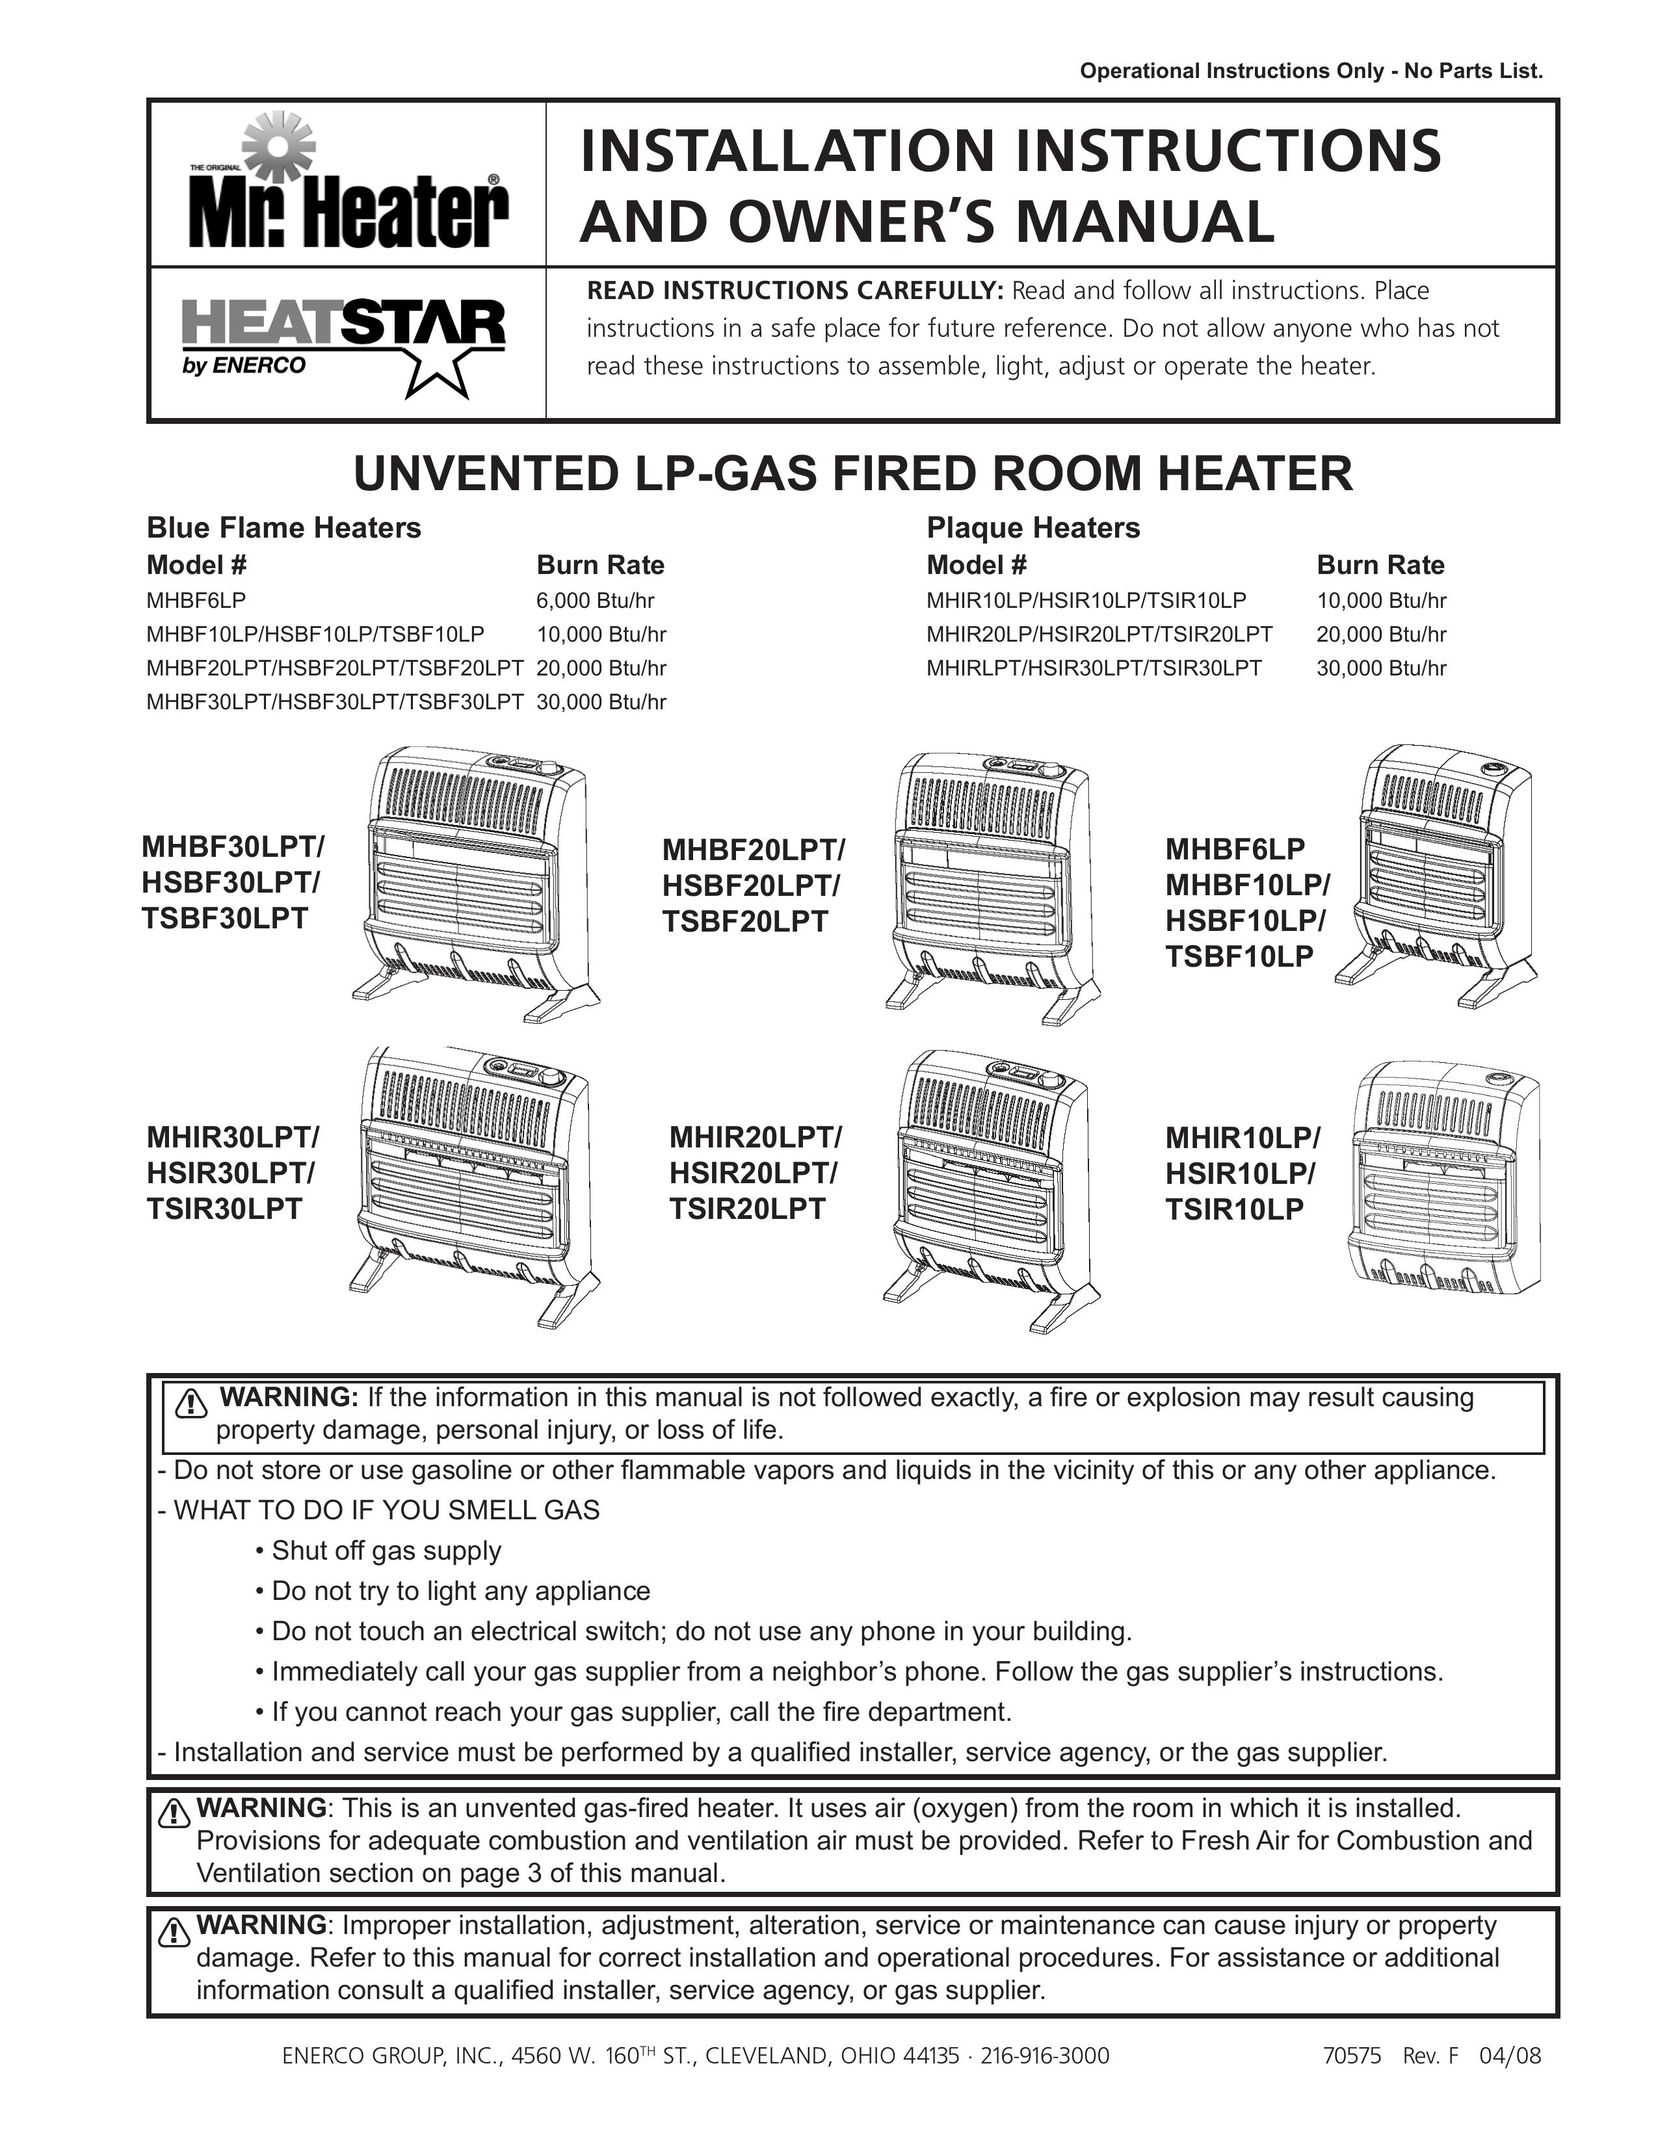 Enerco HSIR20LPT Electric Heater User Manual